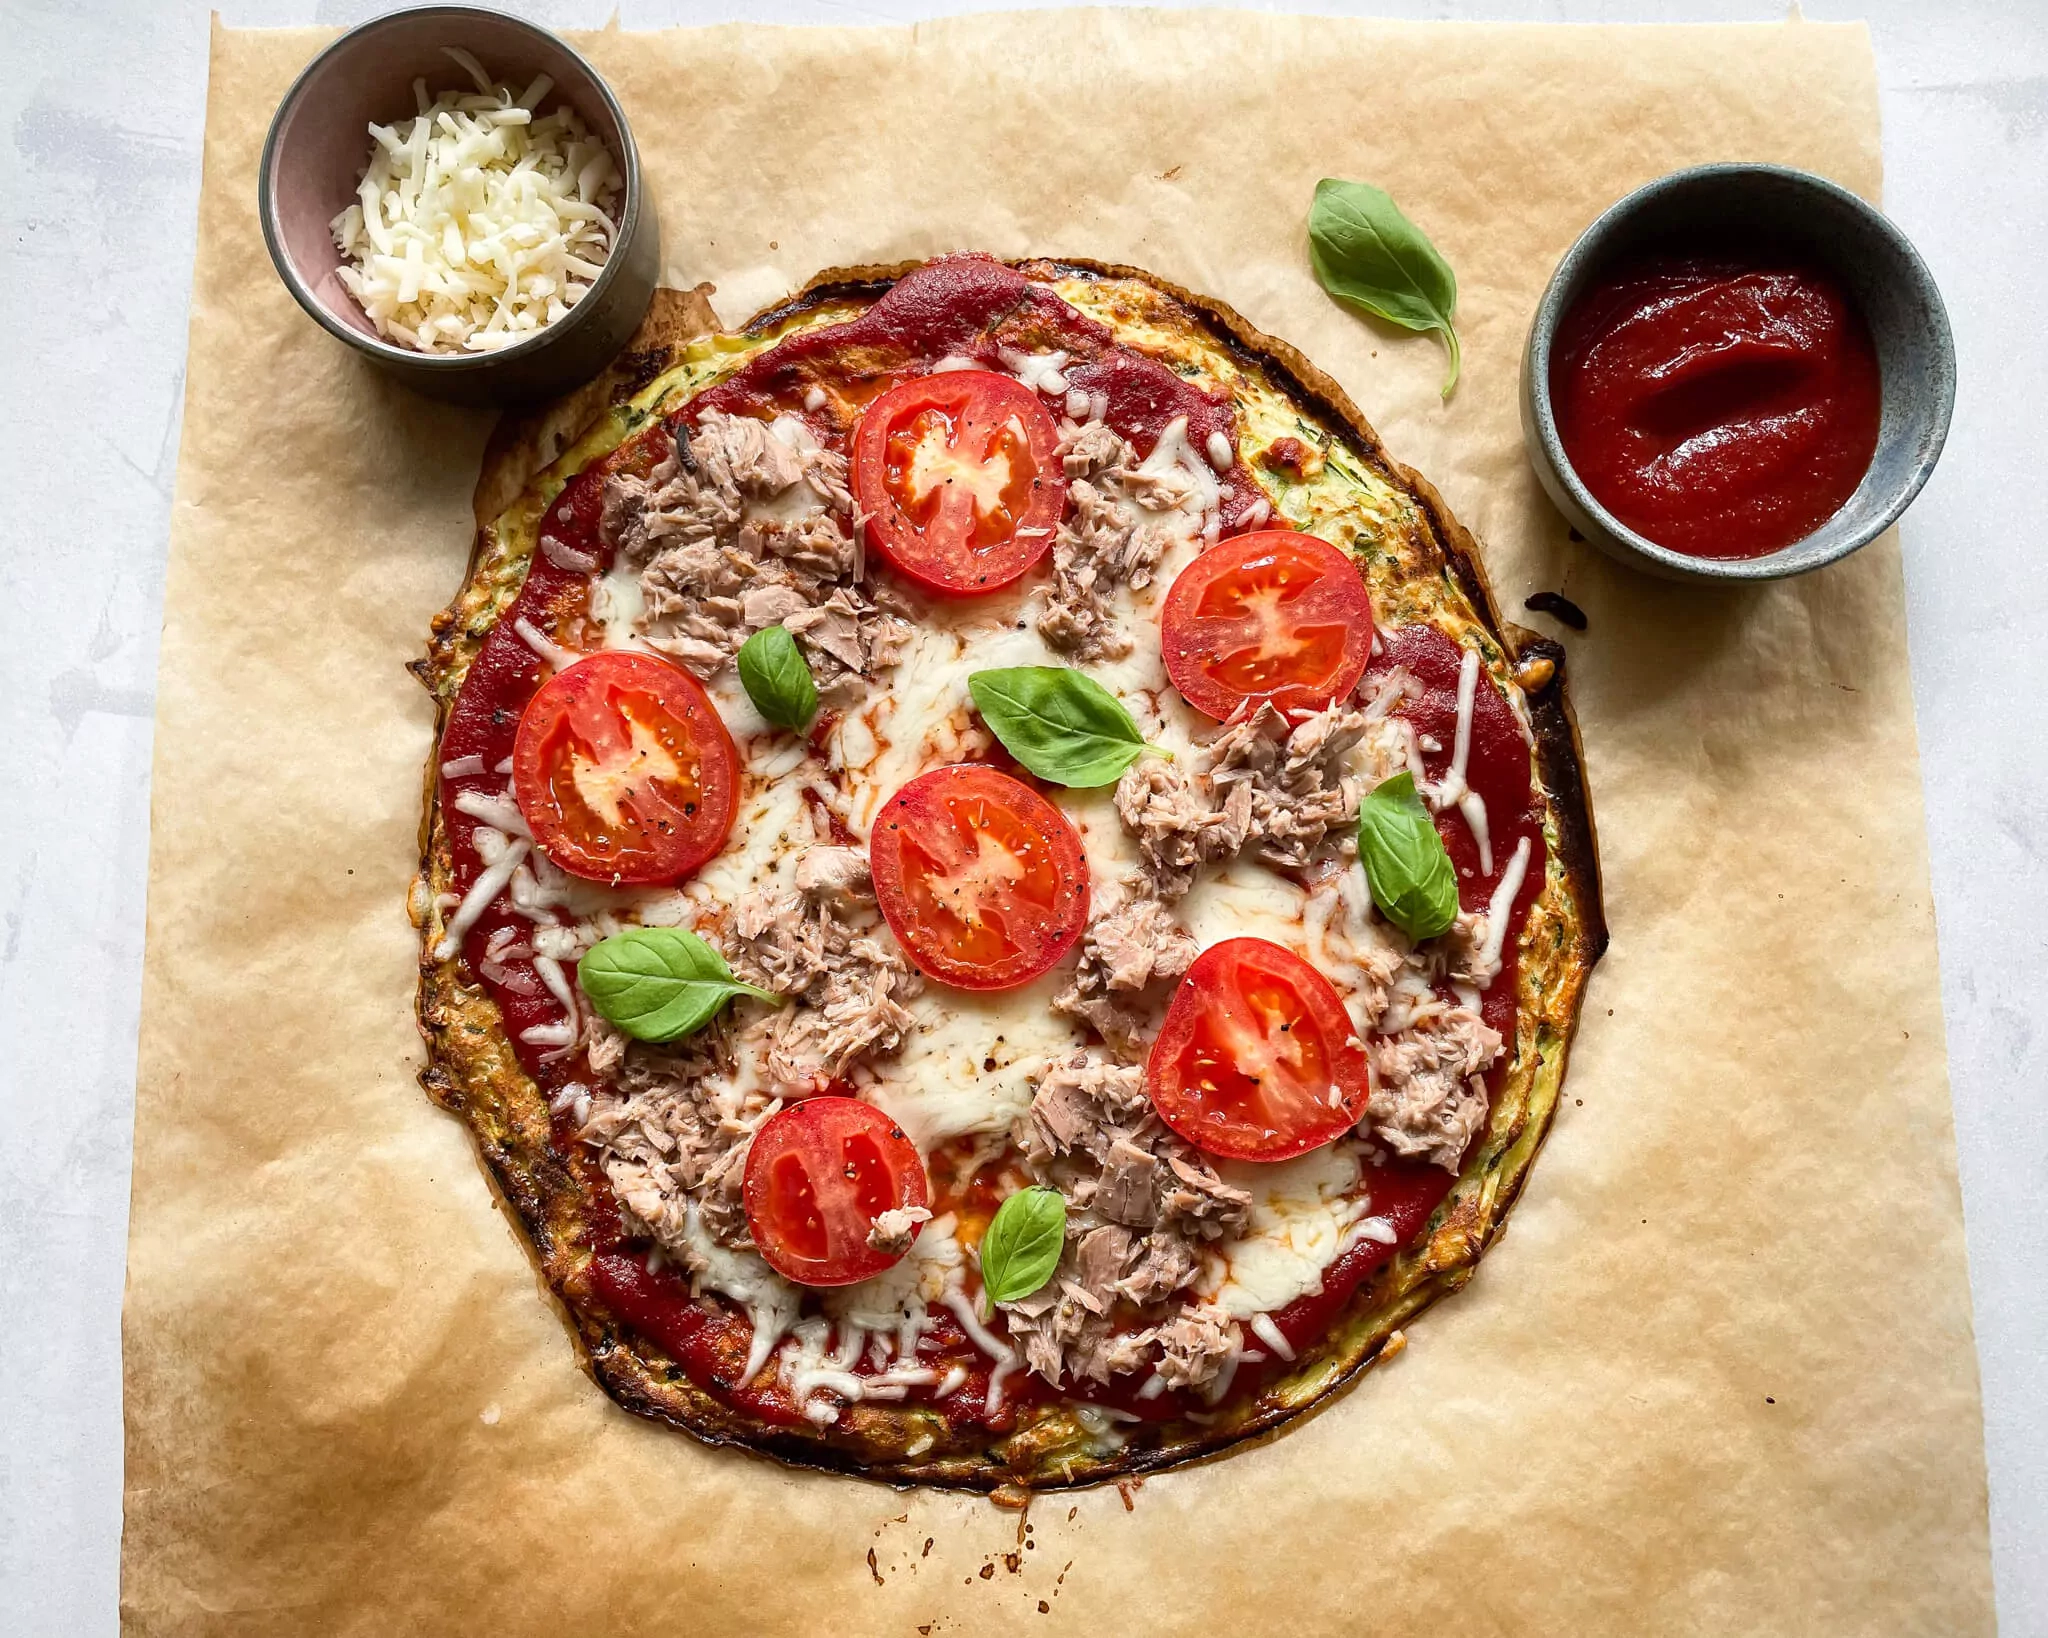 Zucchini-based pizza (gluten-free)